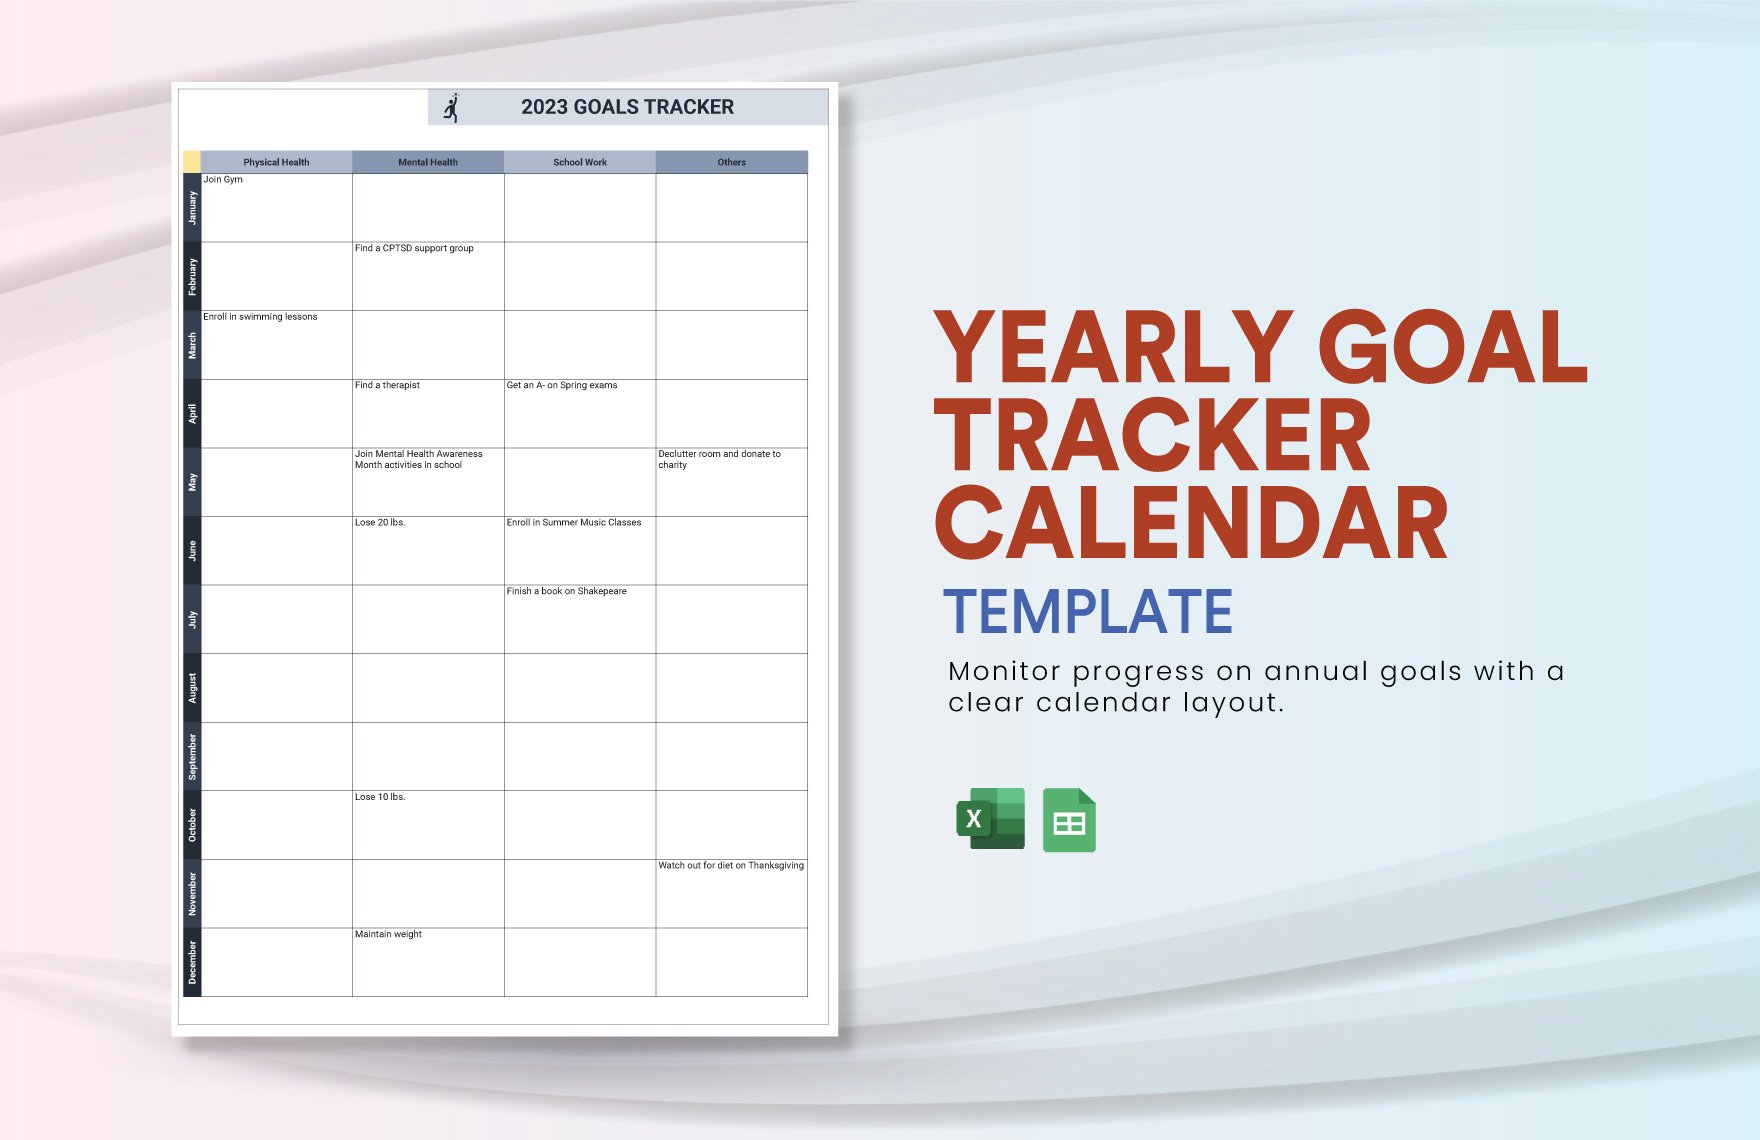 Yearly Goal Tracker Calendar